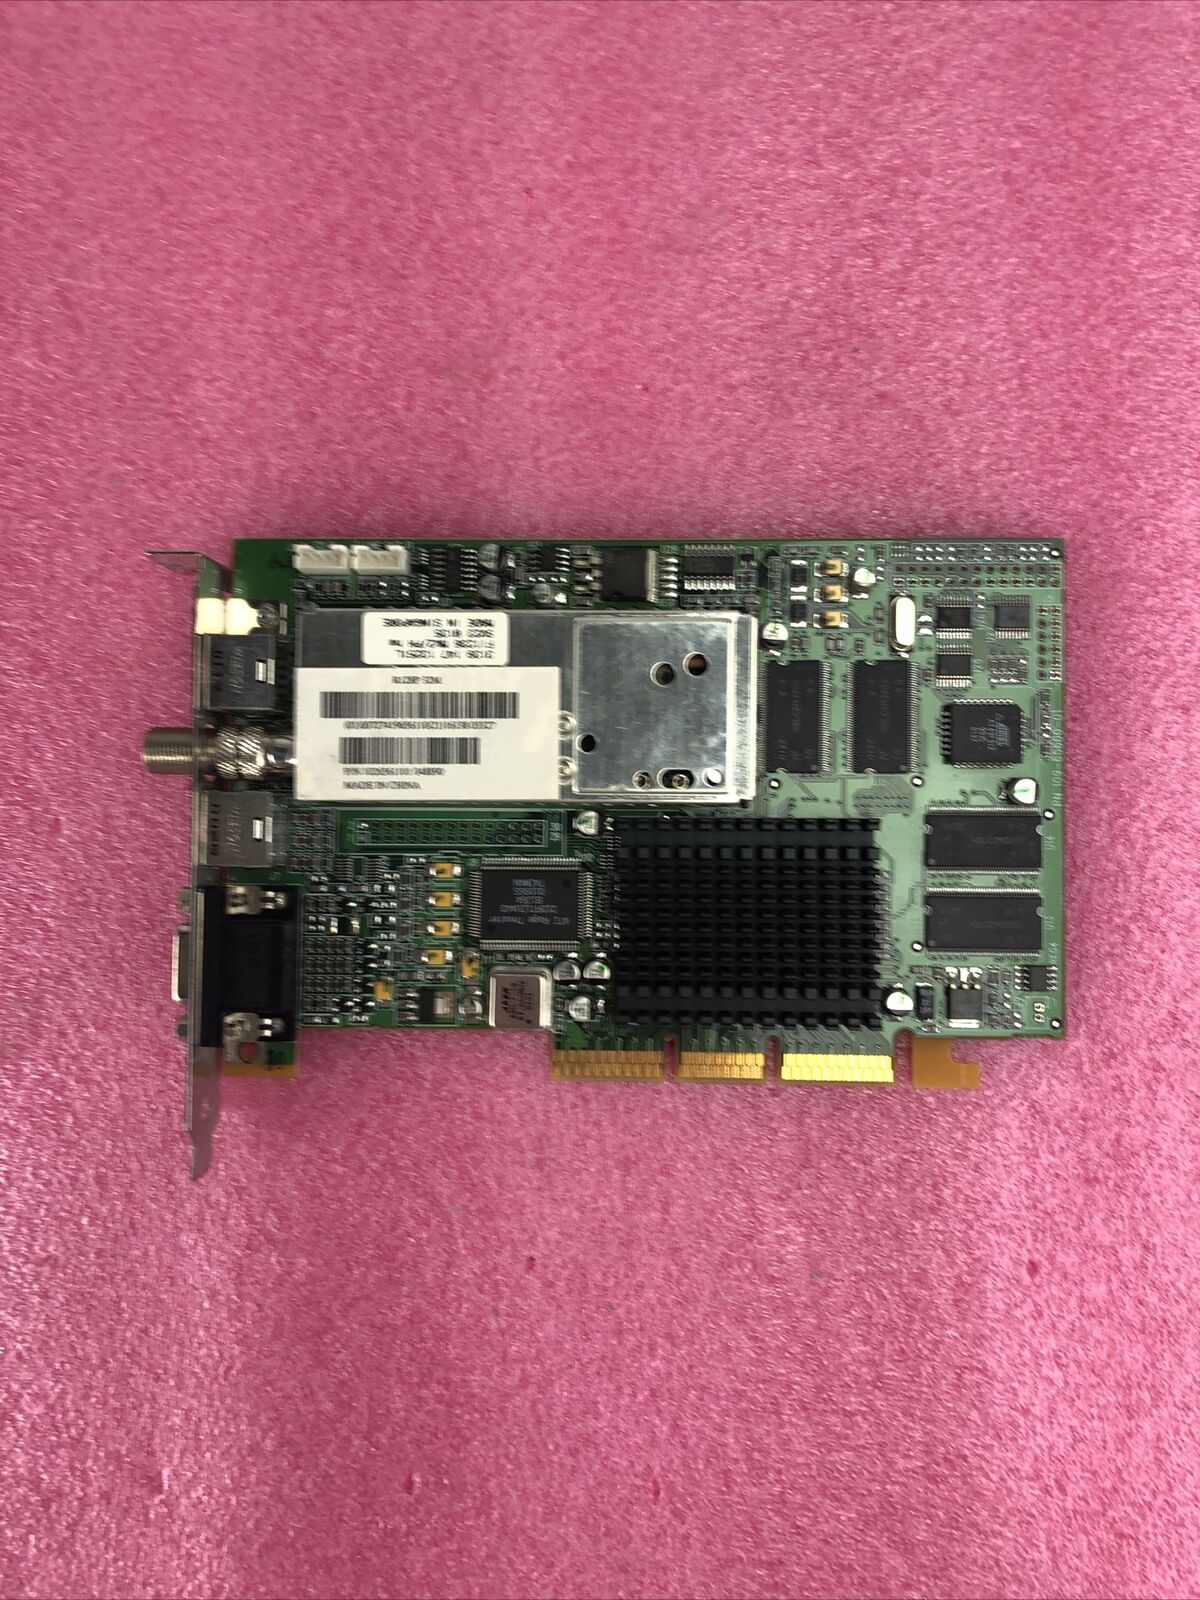 ATI Rage 128 Pro All-In-Wonder AGP Video Card 16MB w/TV Tuner